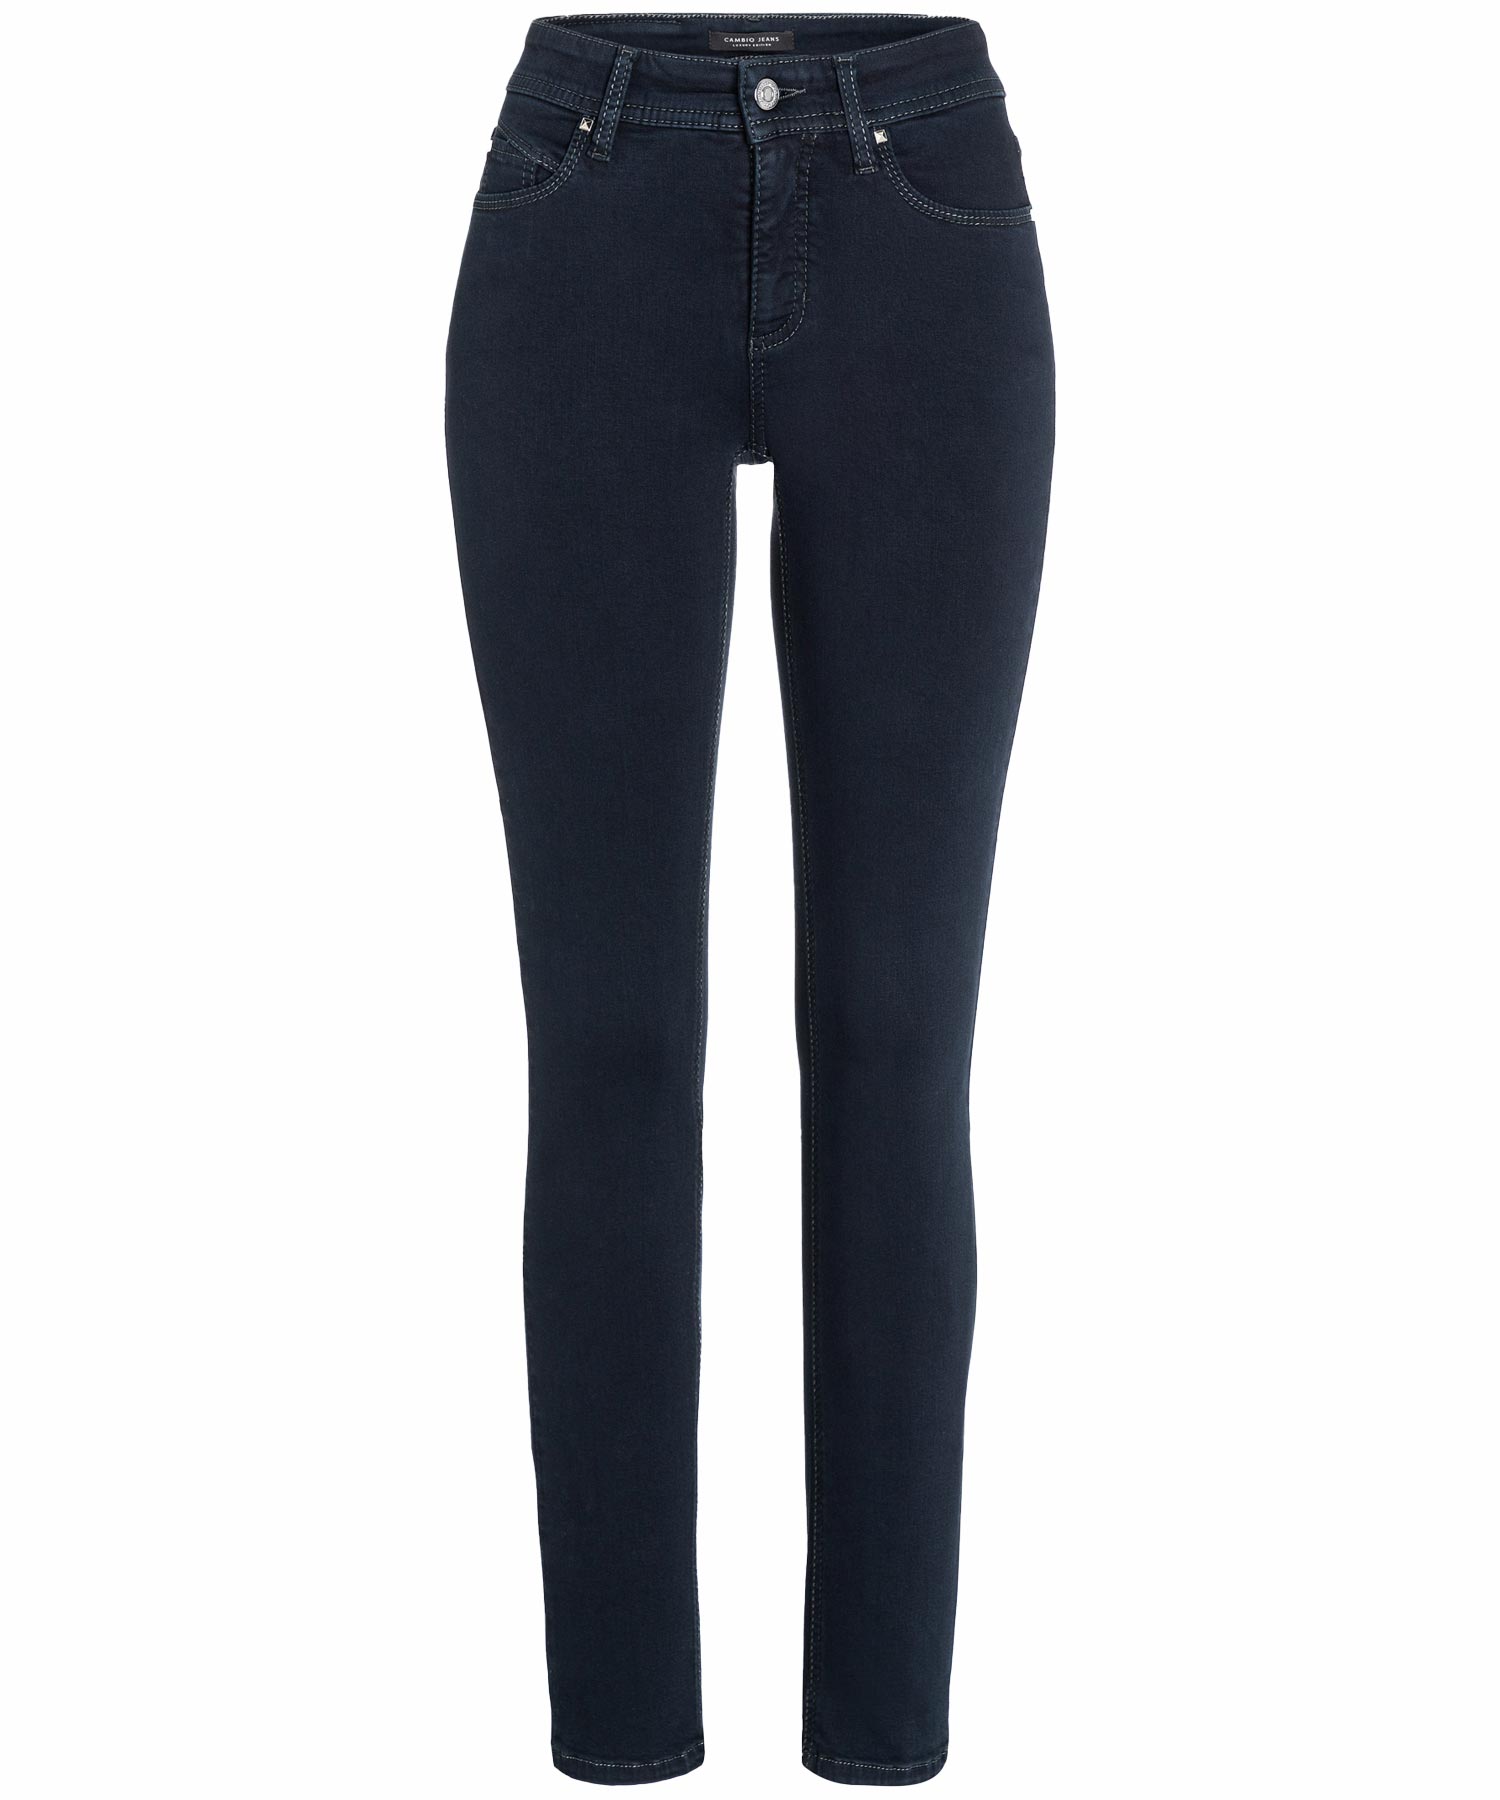 Jeans Parla von Cambio in black-blue overdyed